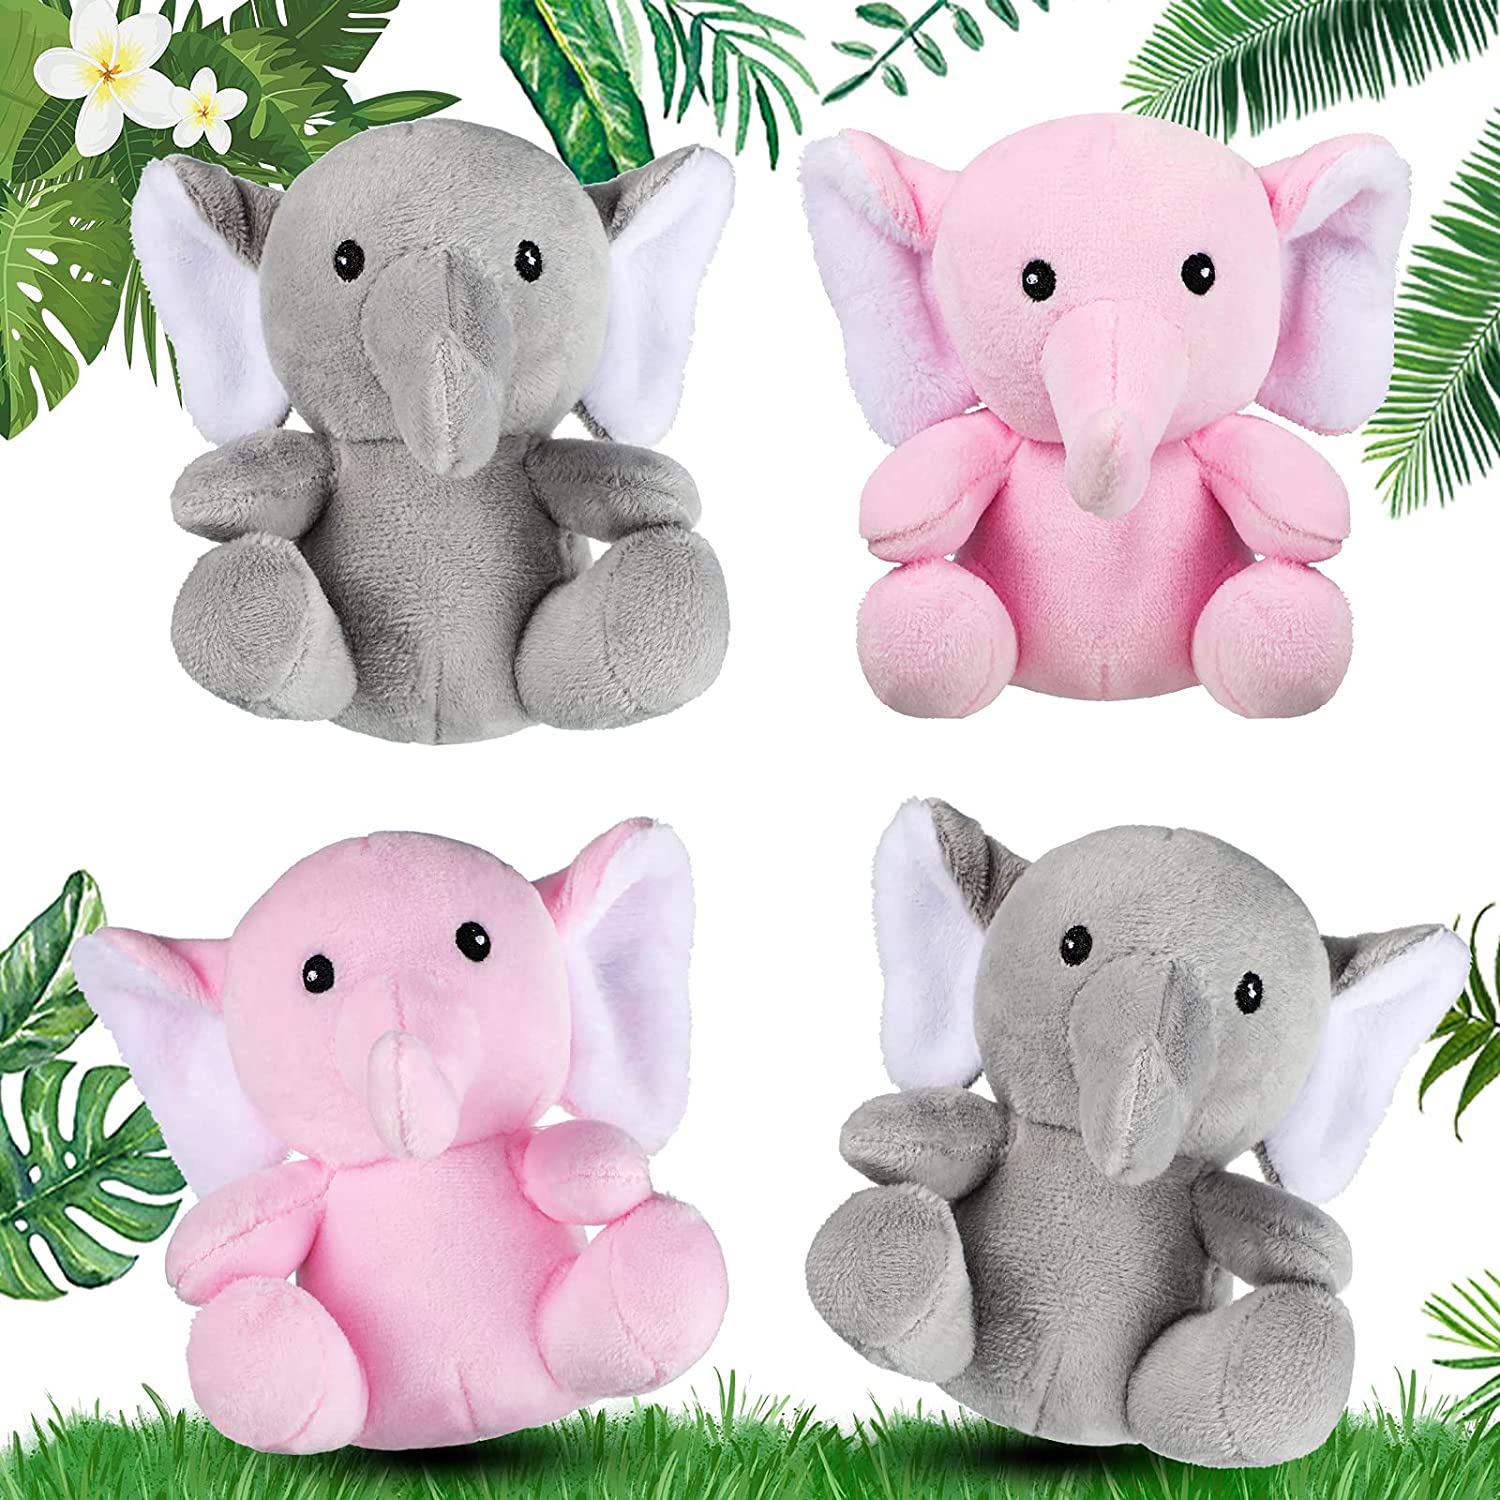 Mini Lovely Elephant Stuffed Animals Kids Baby Soft Plush Toy Gift Doll Convenie 